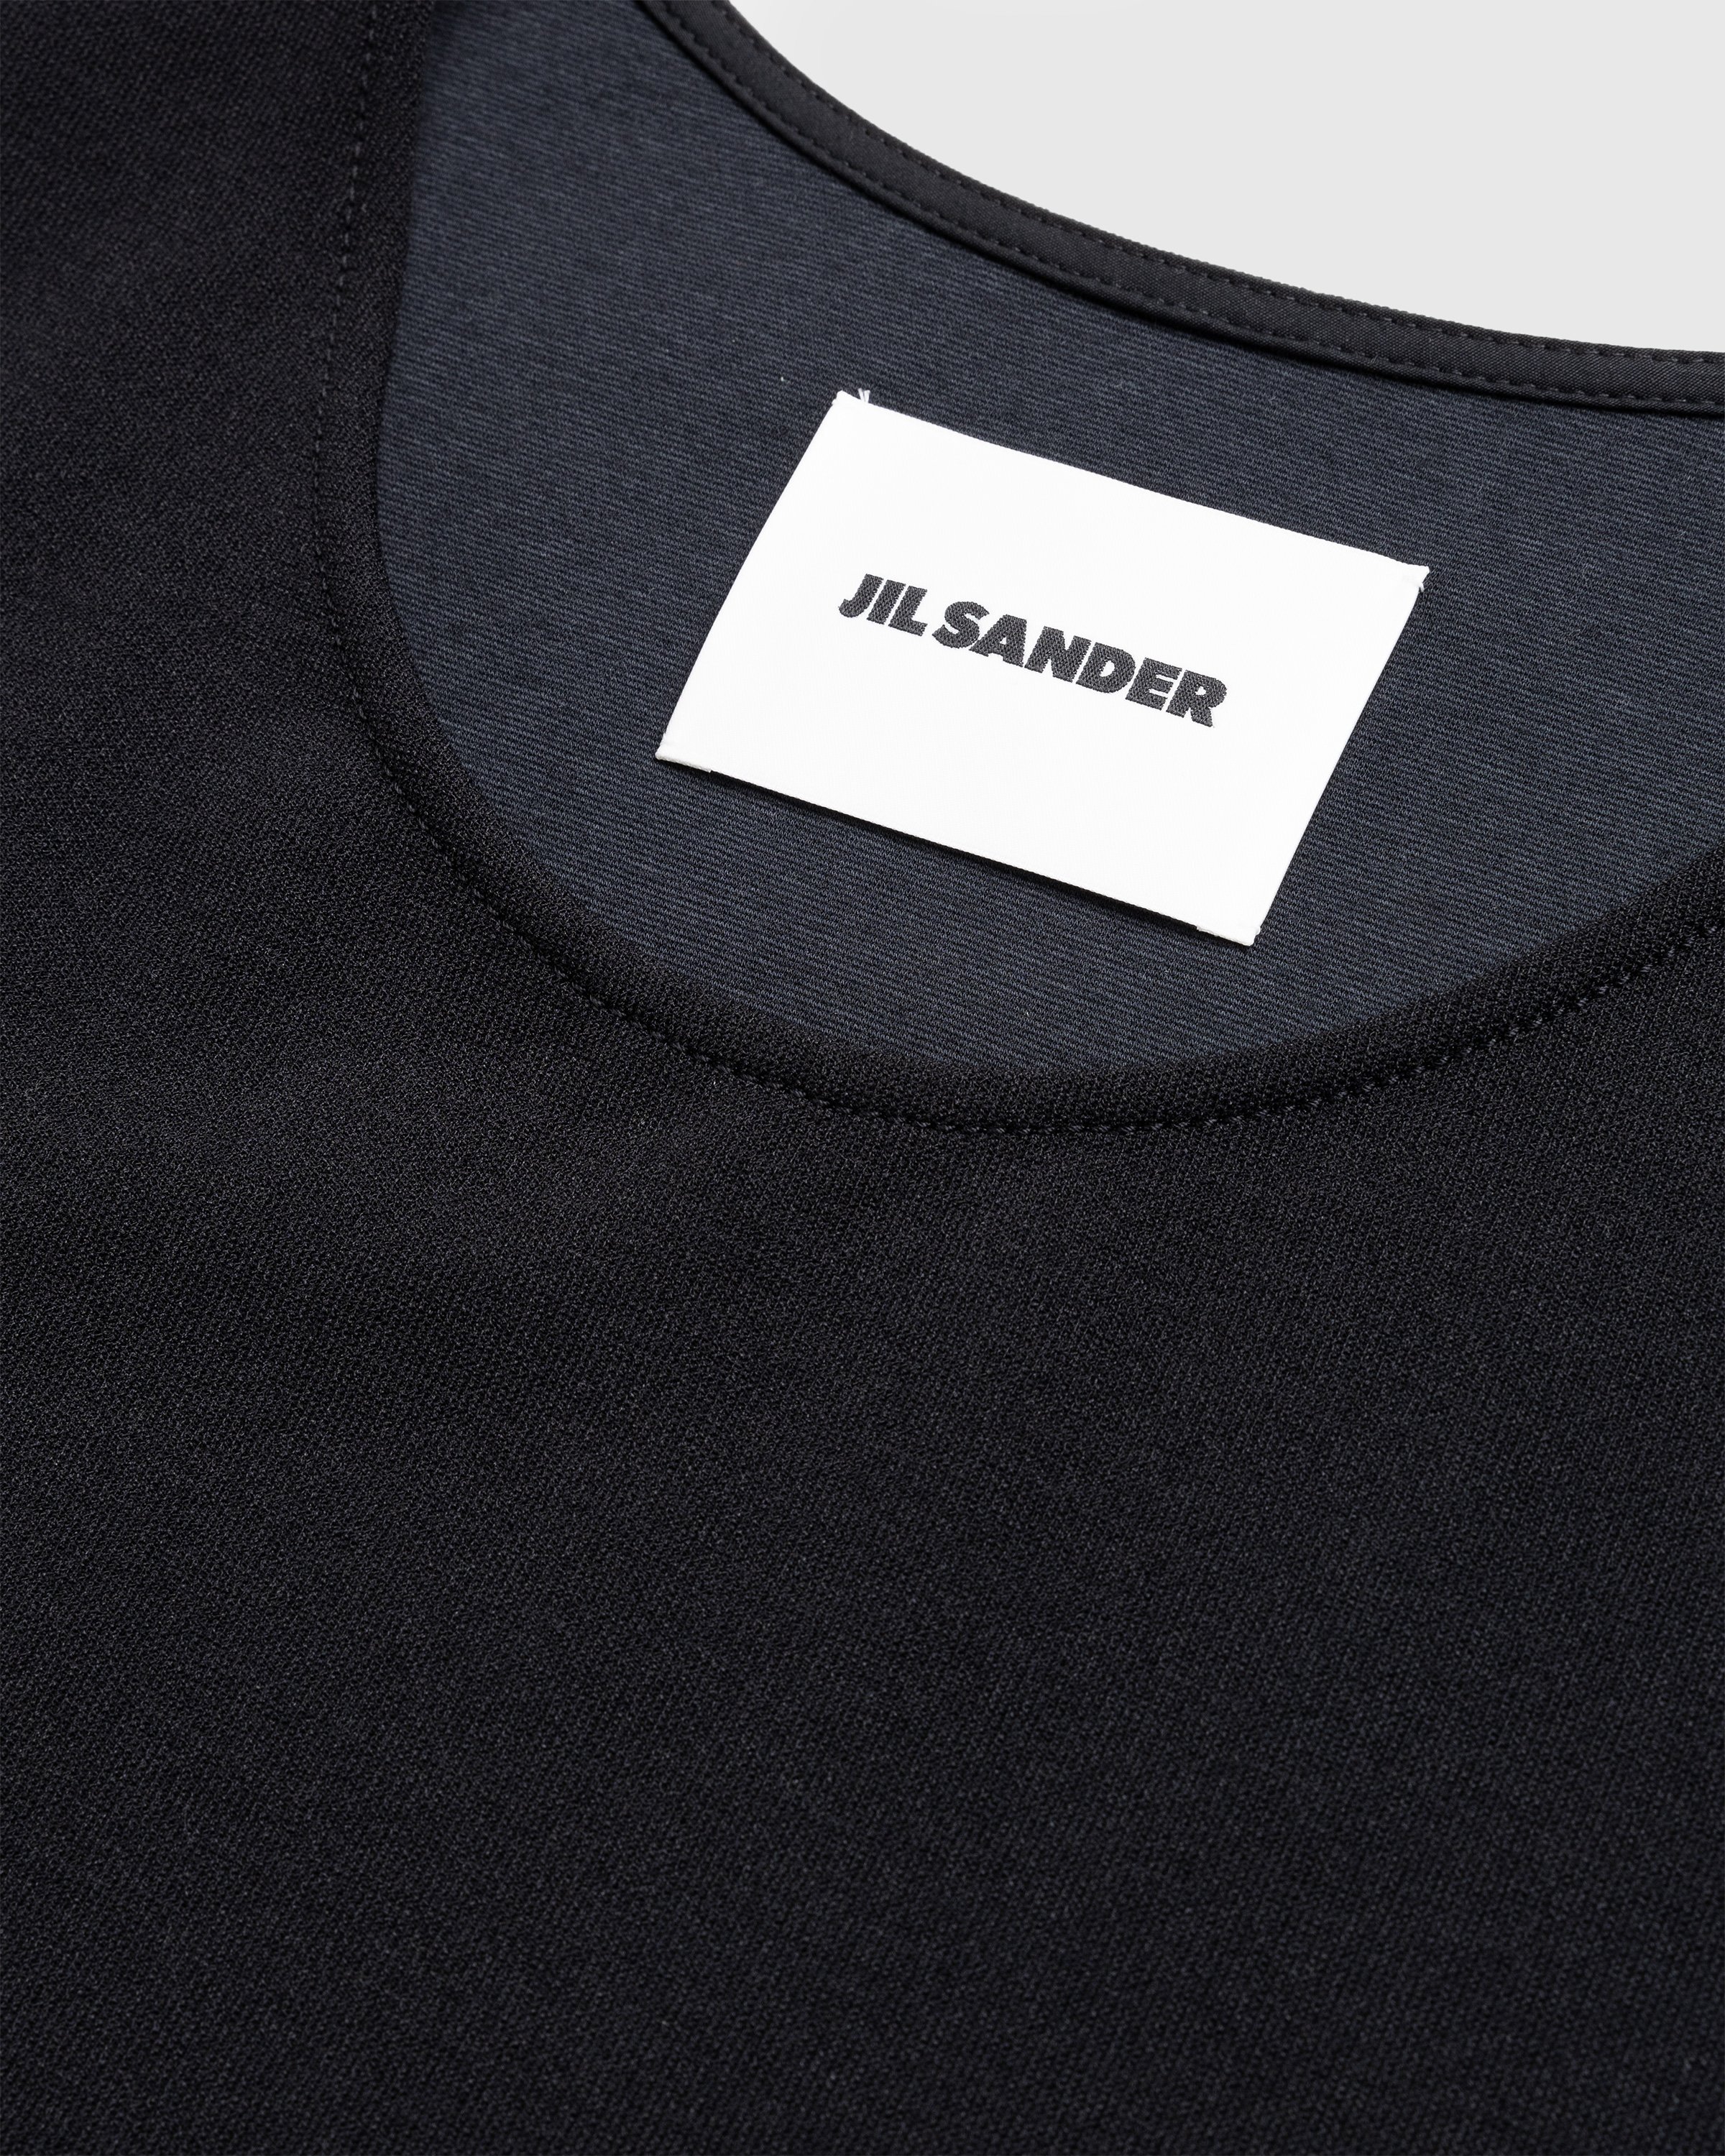 Jil Sander - Tank Top - Clothing - Black - Image 5